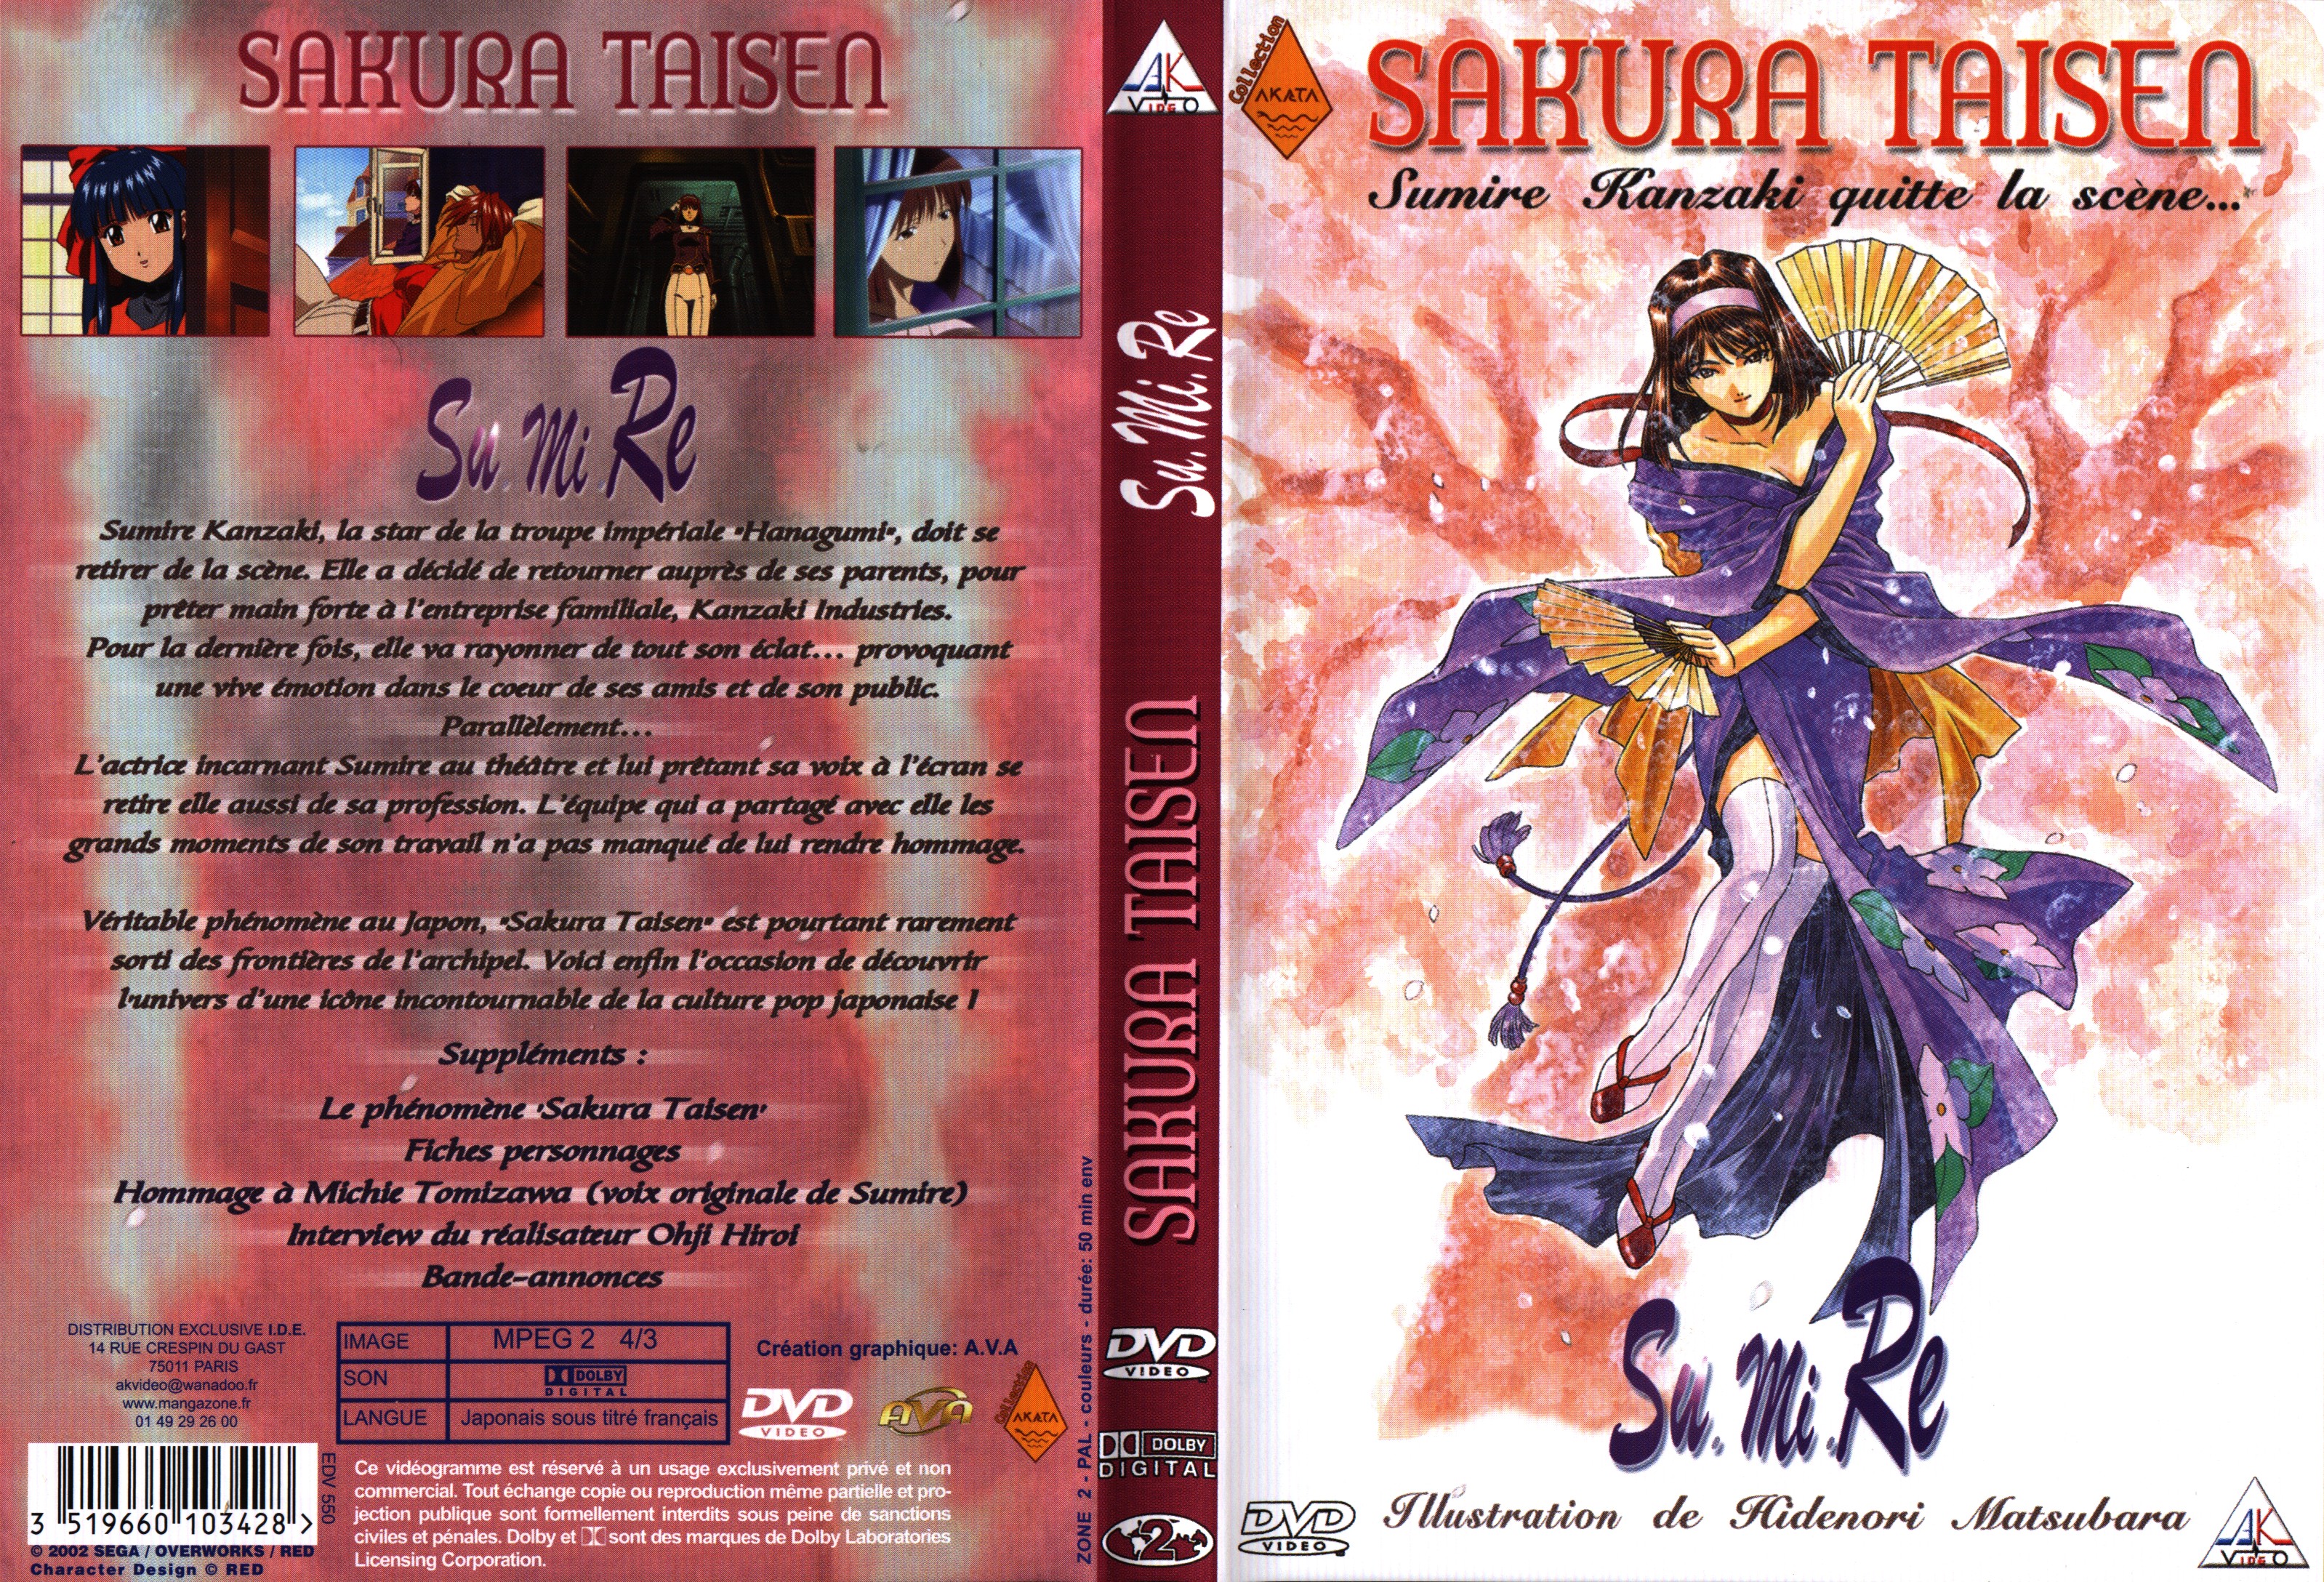 Jaquette DVD Sakura taisen su mi re